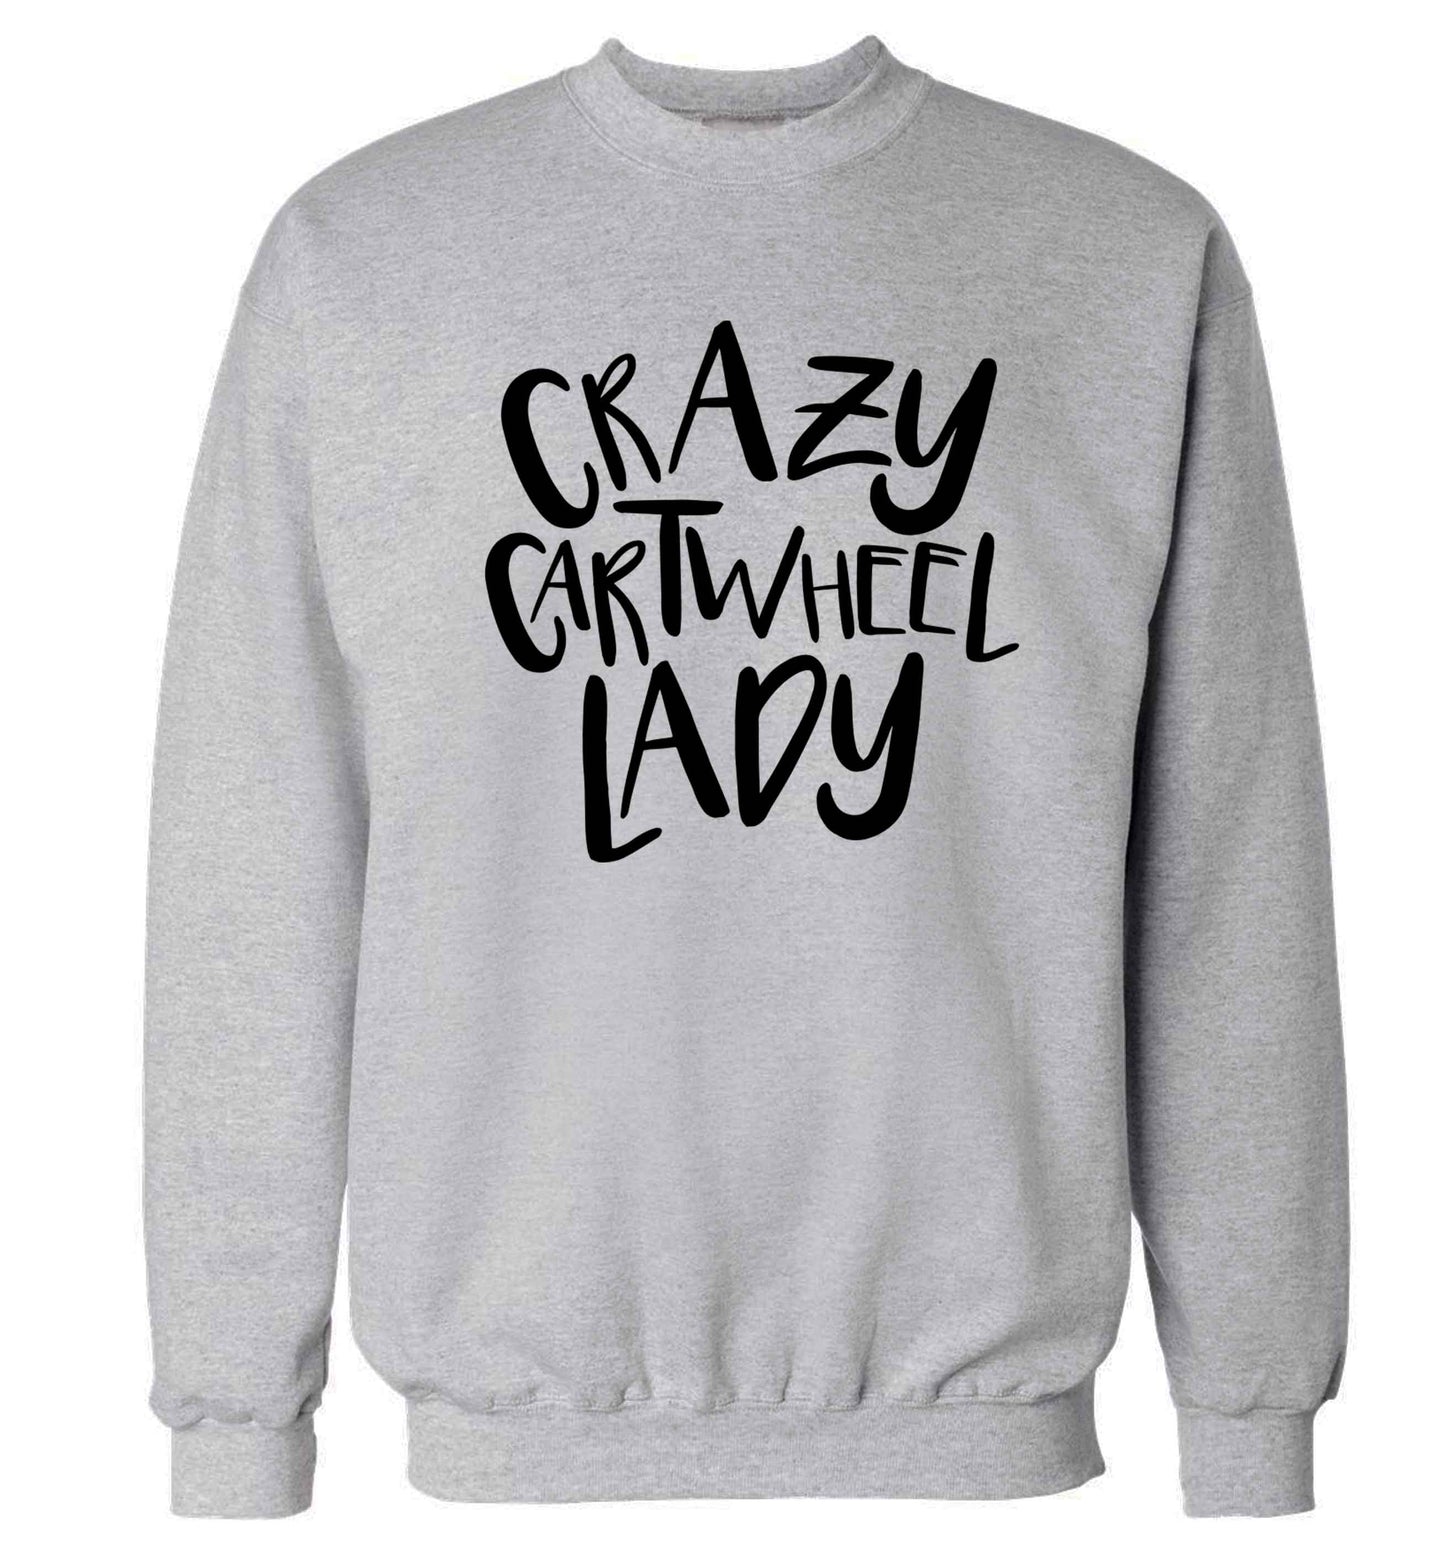 Crazy cartwheel lady Adult's unisex grey Sweater 2XL